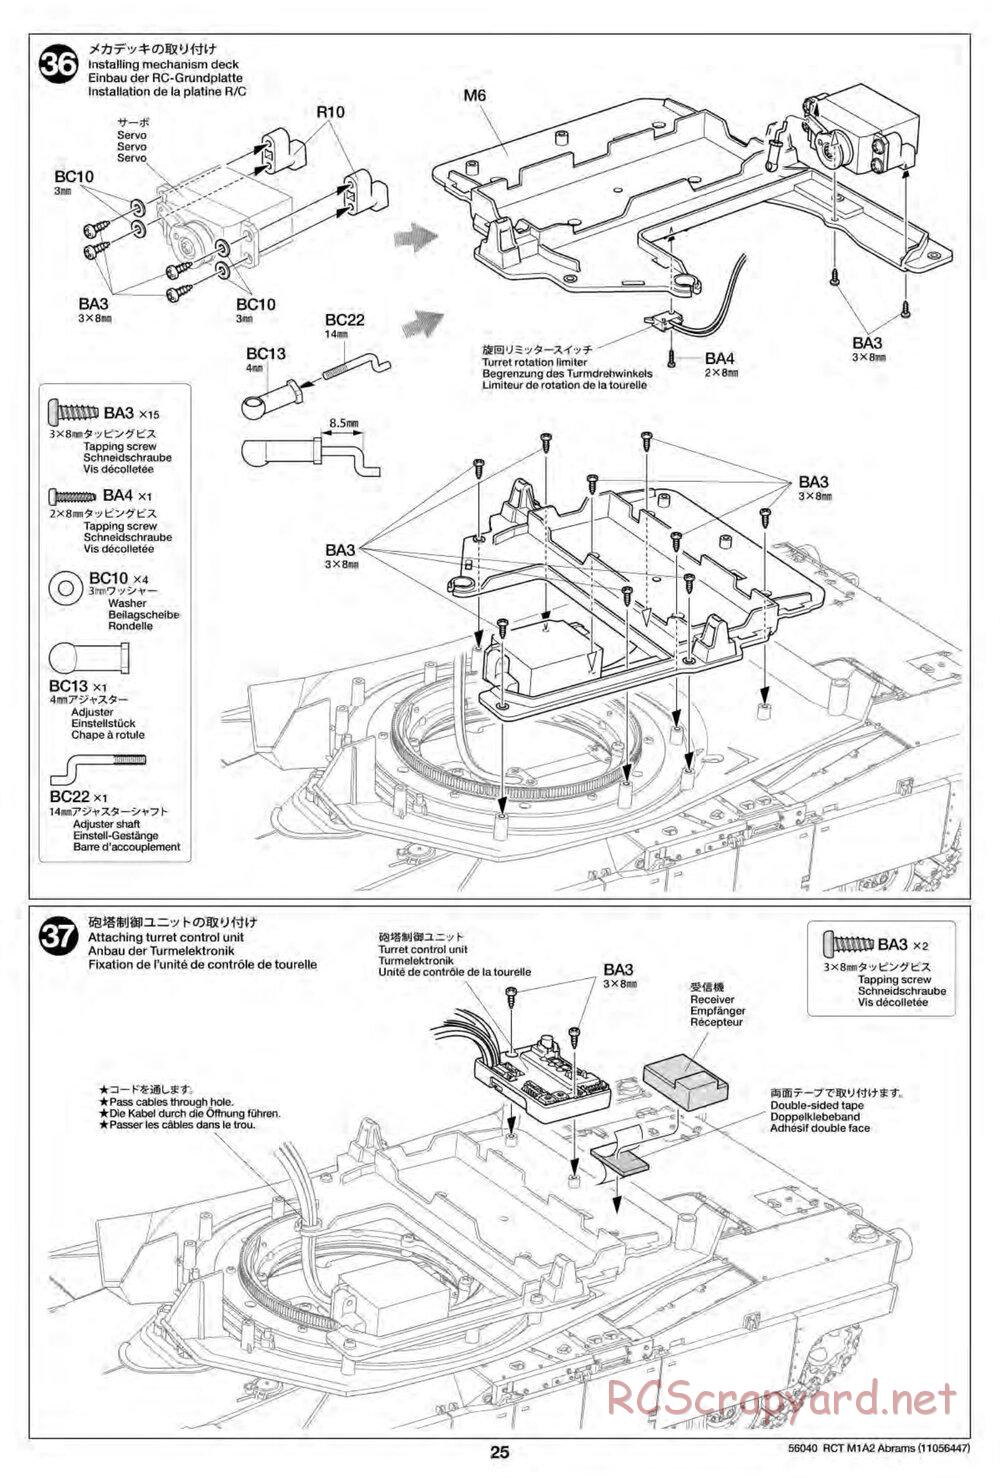 Tamiya - U.S. Main Battle Tank M1A2 Abrams - 1/16 Scale Chassis - Manual - Page 25